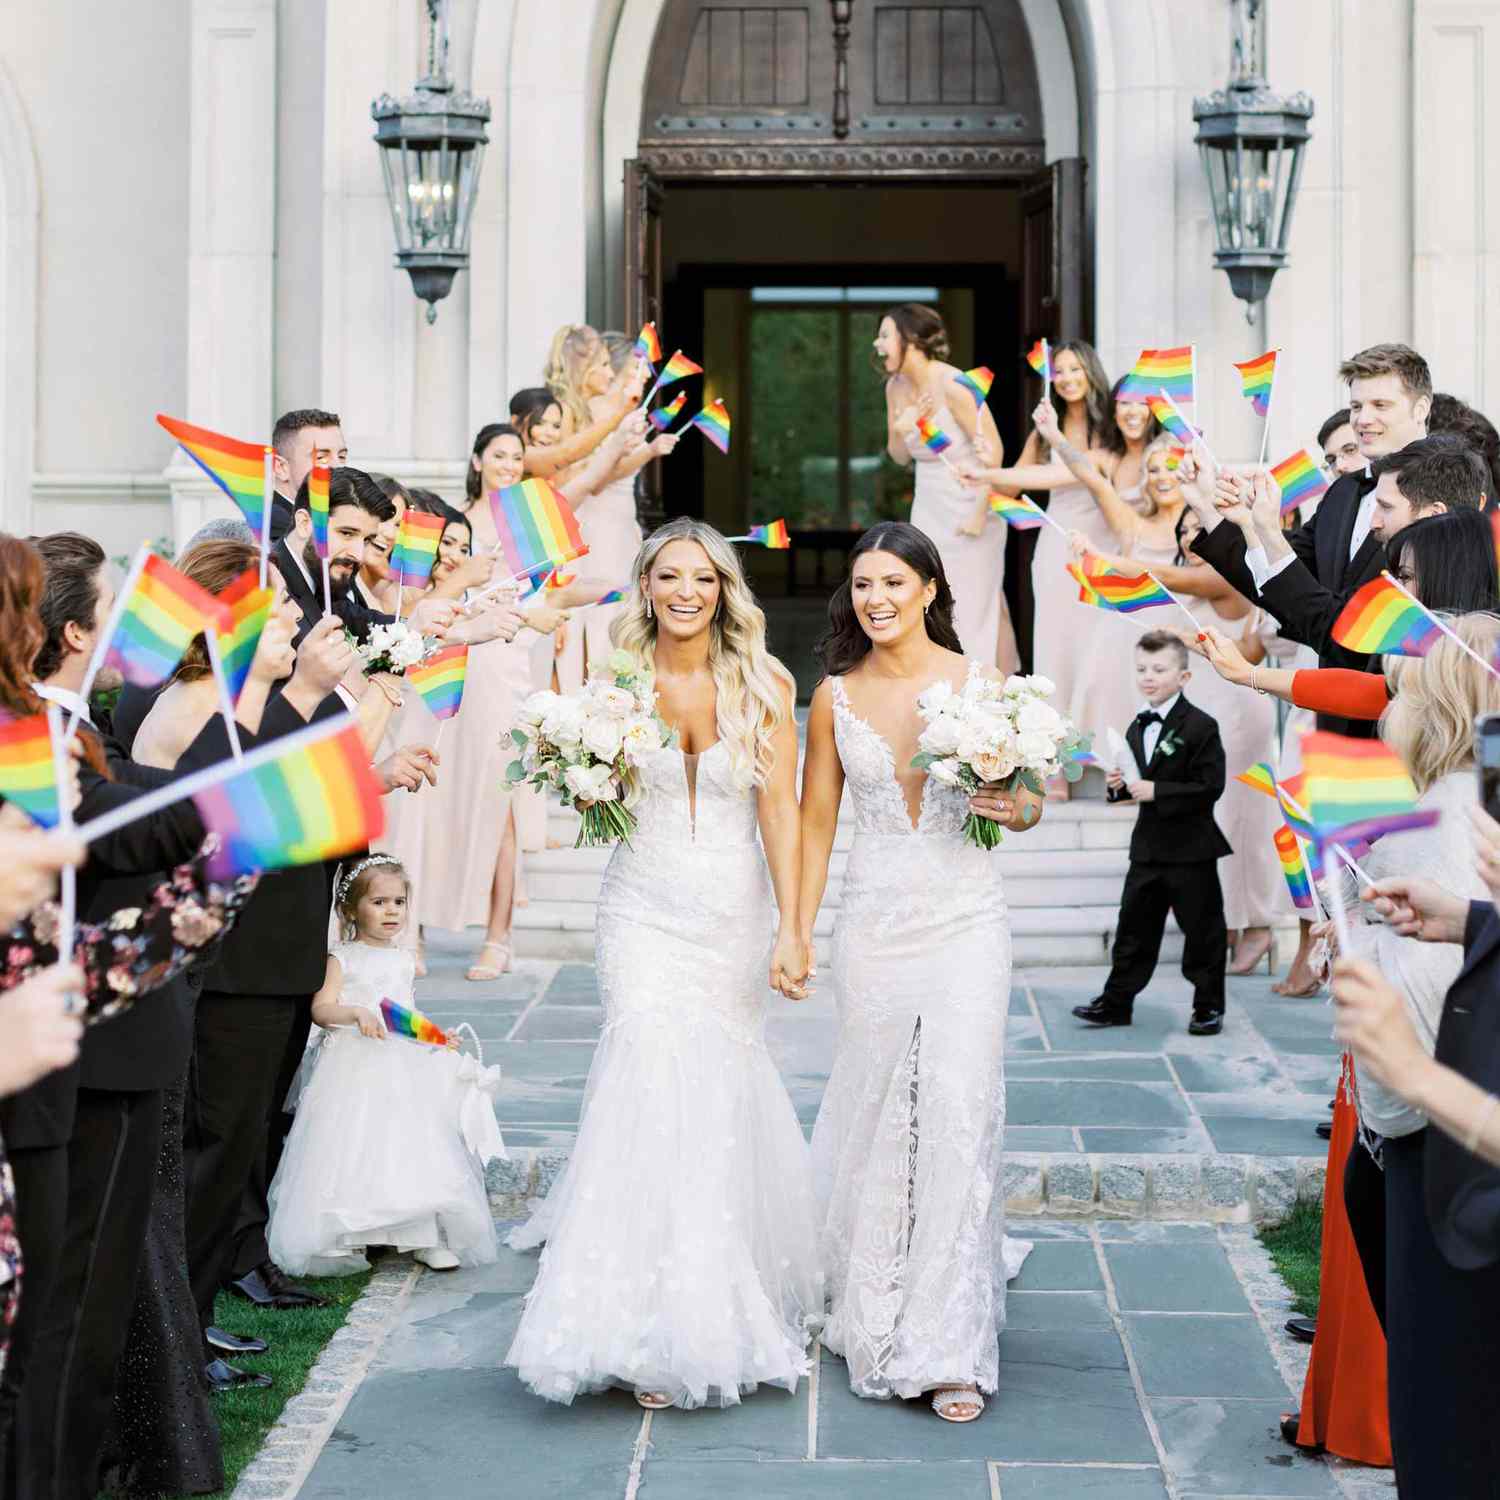 ayesha barry share lesbian bridal stories 3 photos